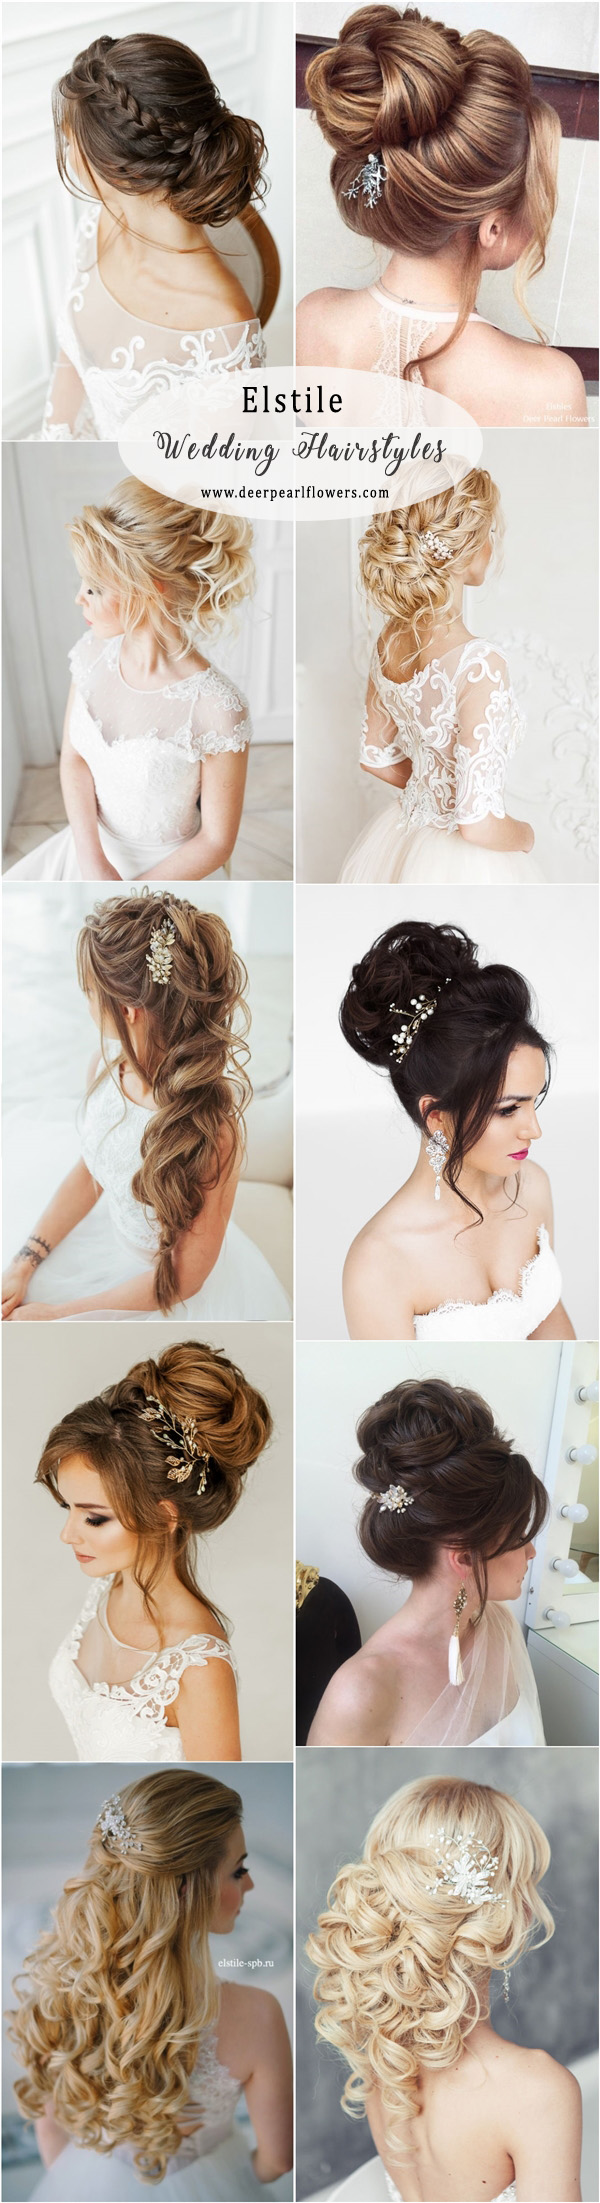 Elstile wedding hairstyles updos for long hair